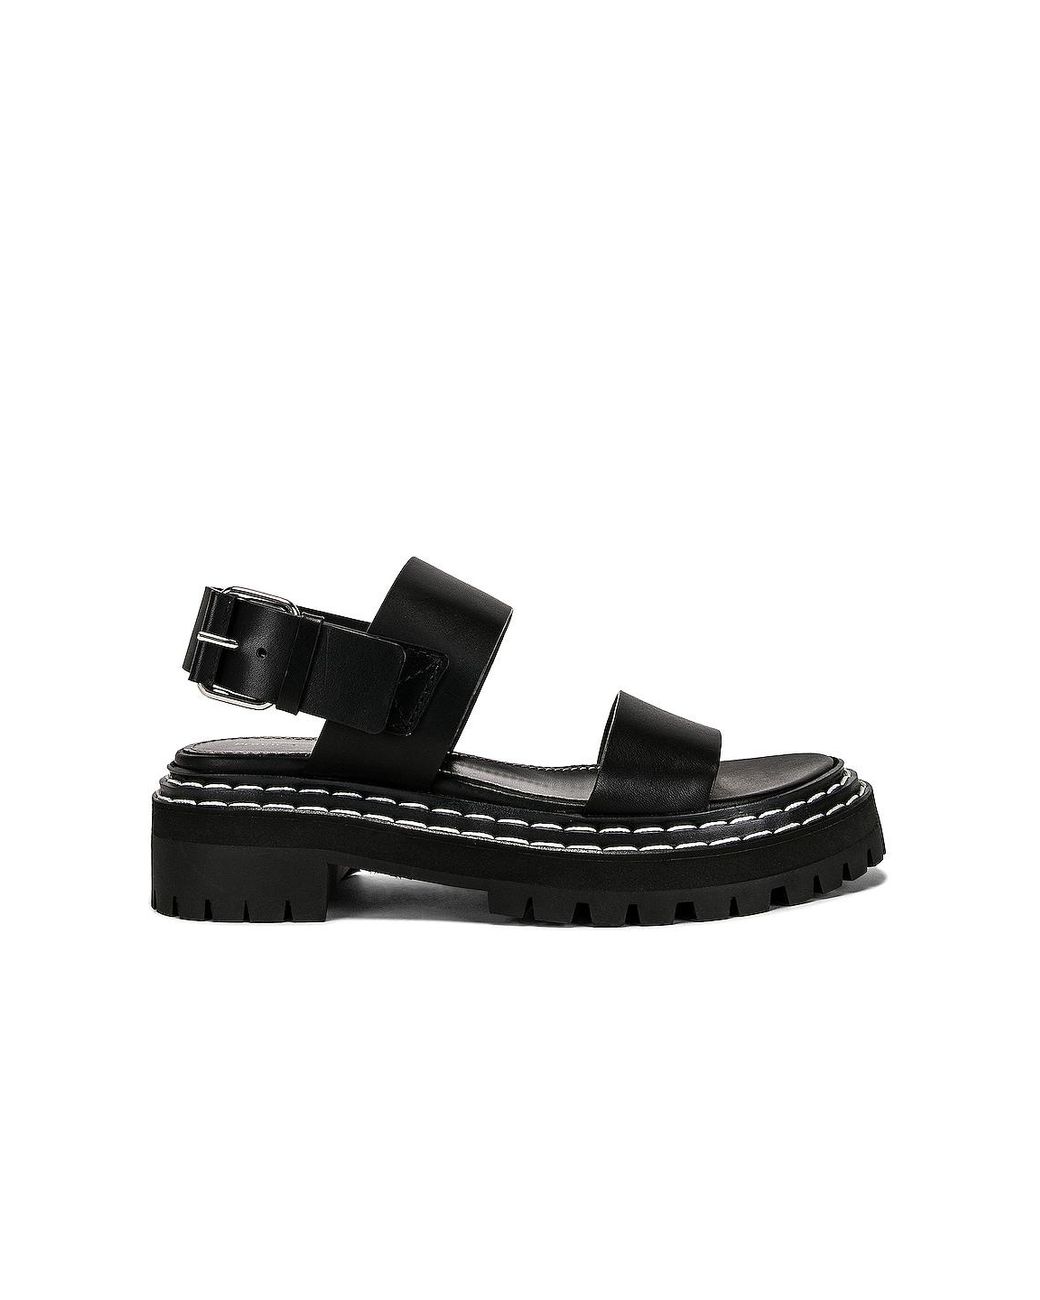 Proenza Schouler Lug Sole Sandals in Black | Lyst